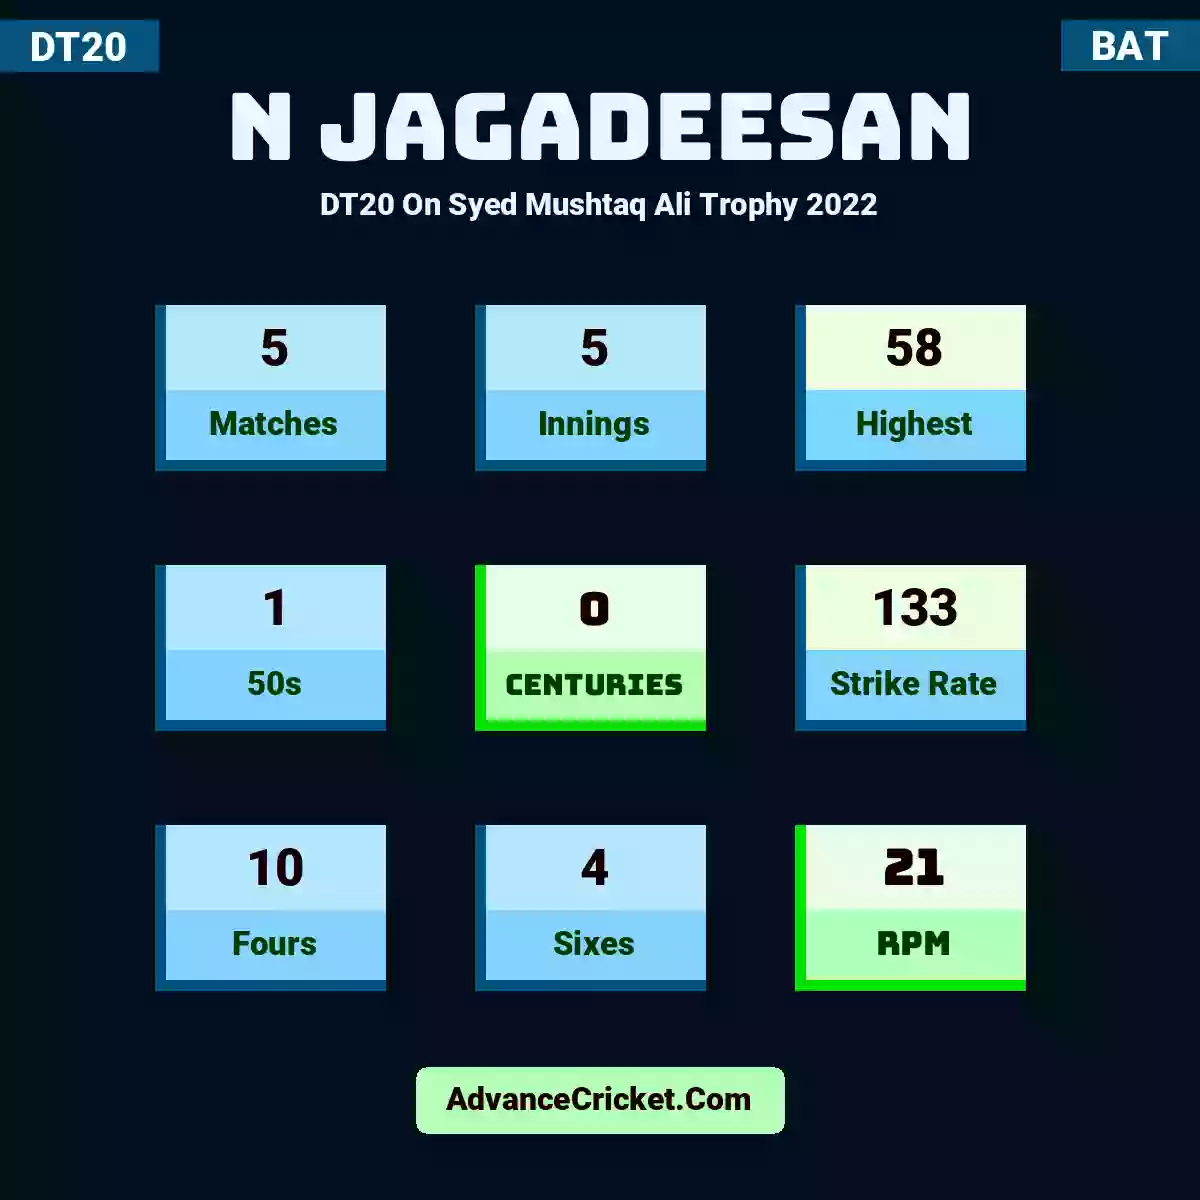 N Jagadeesan DT20  On Syed Mushtaq Ali Trophy 2022, N Jagadeesan played 5 matches, scored 58 runs as highest, 1 half-centuries, and 0 centuries, with a strike rate of 133. N.Jagadeesan hit 10 fours and 4 sixes, with an RPM of 21.